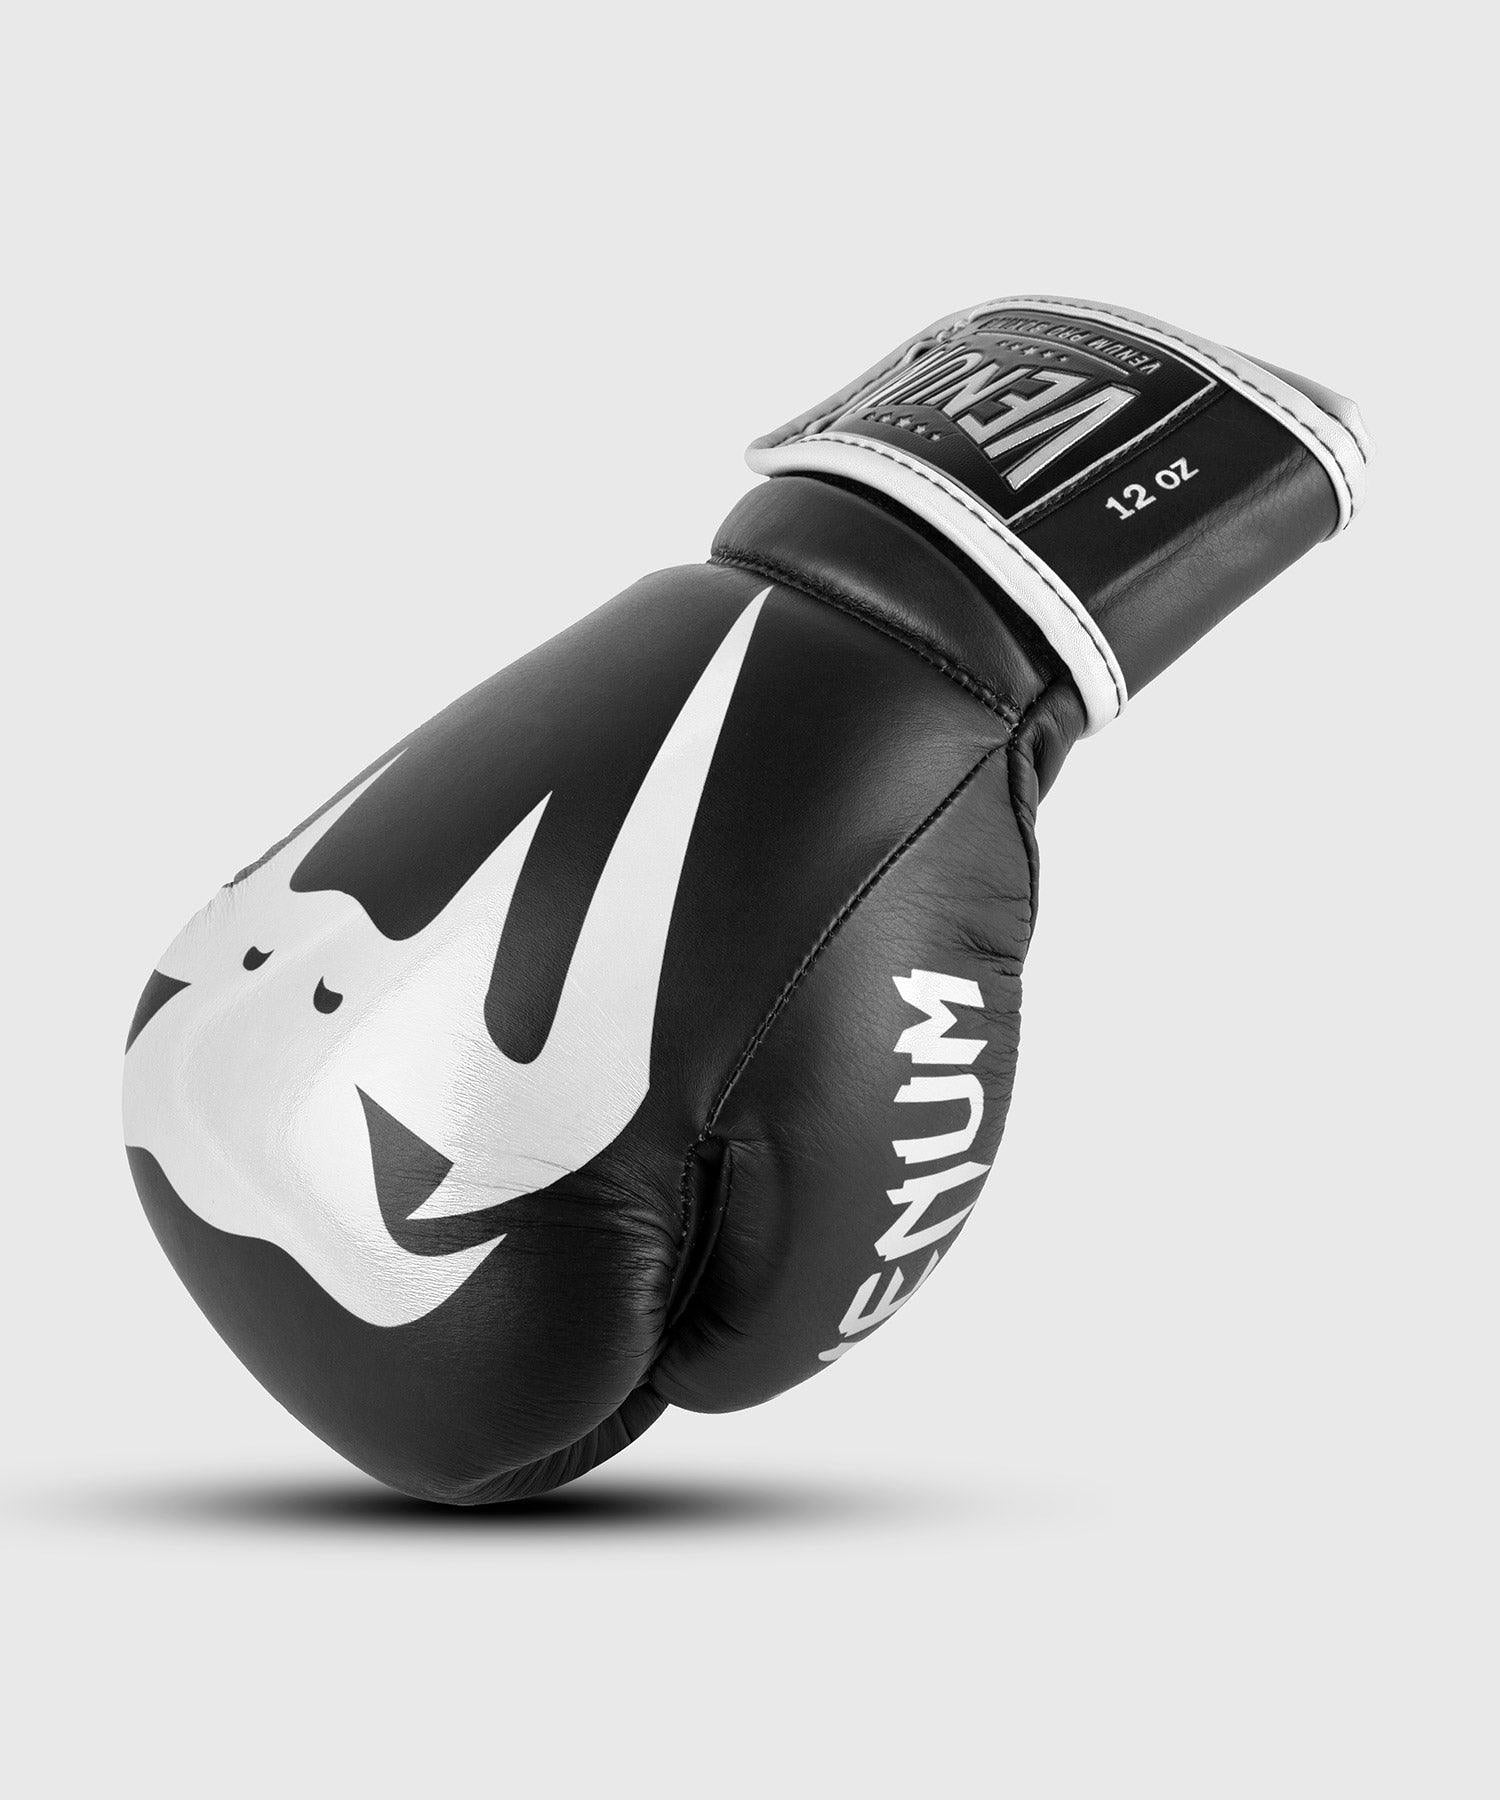 Guantes de boxeo Venum Giant 3.0 Boxing Gloves - Cuero Nappa - Blanco